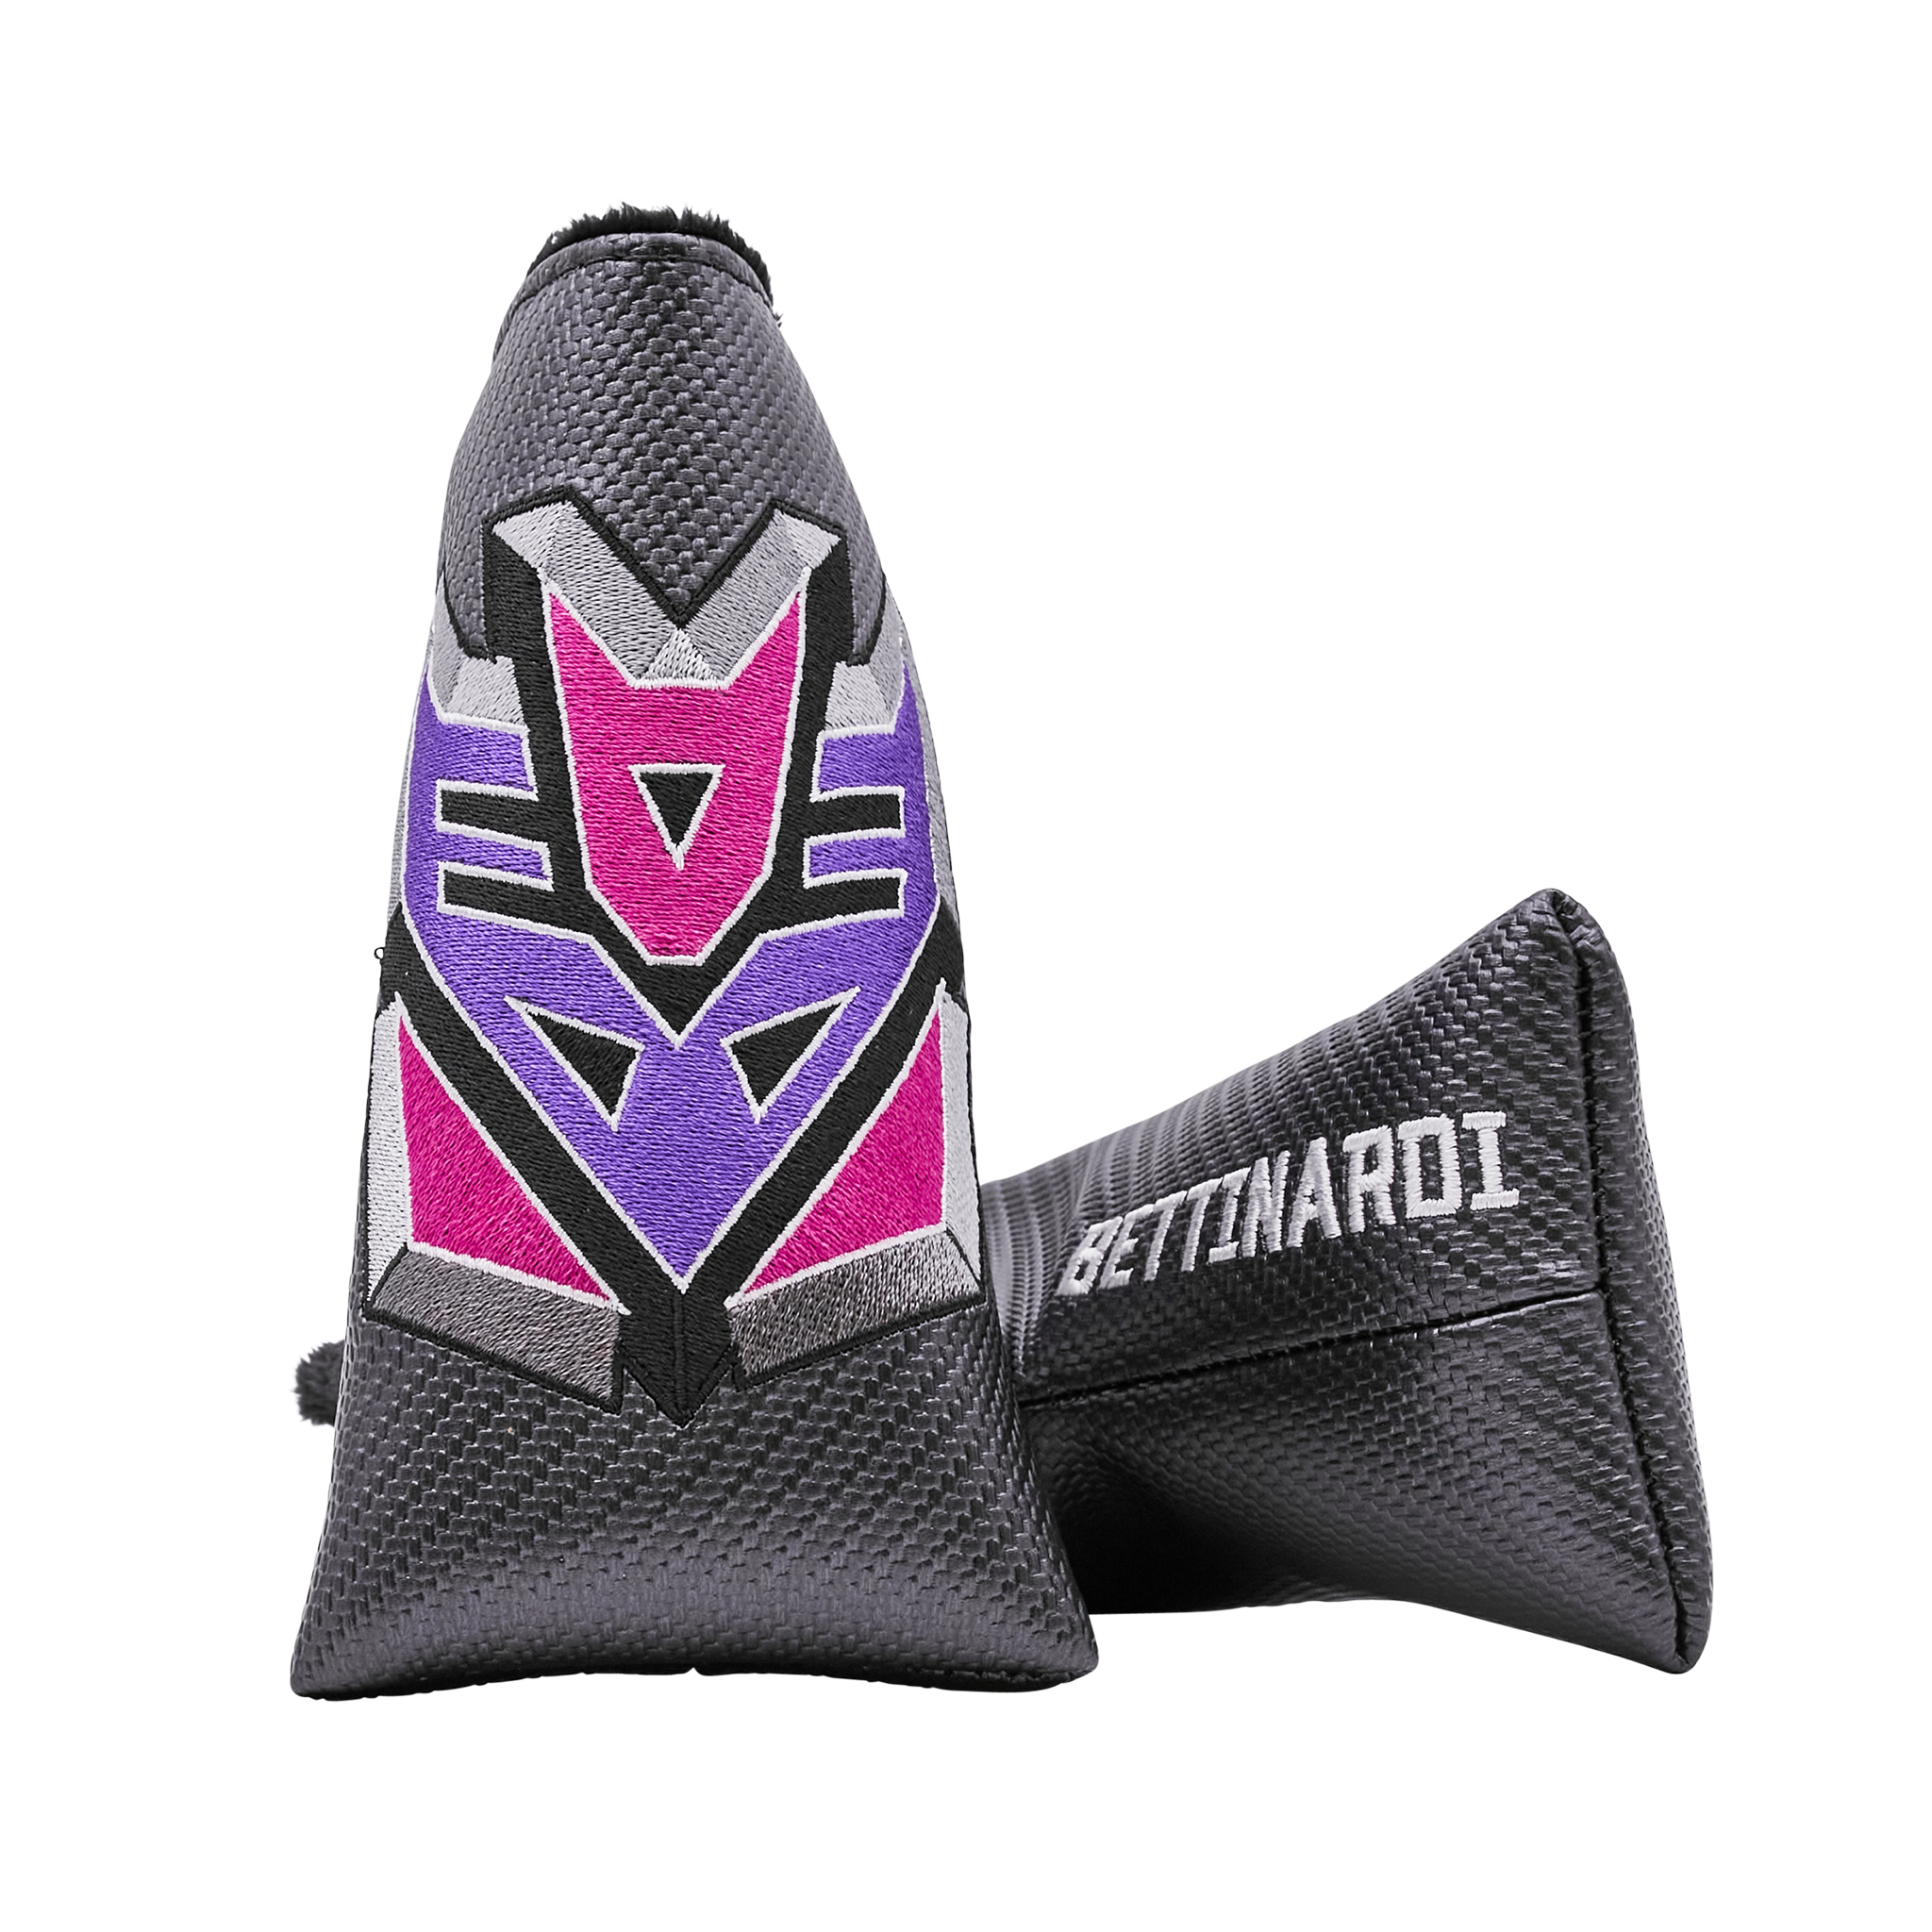 Bettinardi x Transformers Decepticon Blade Putter Headcover - main